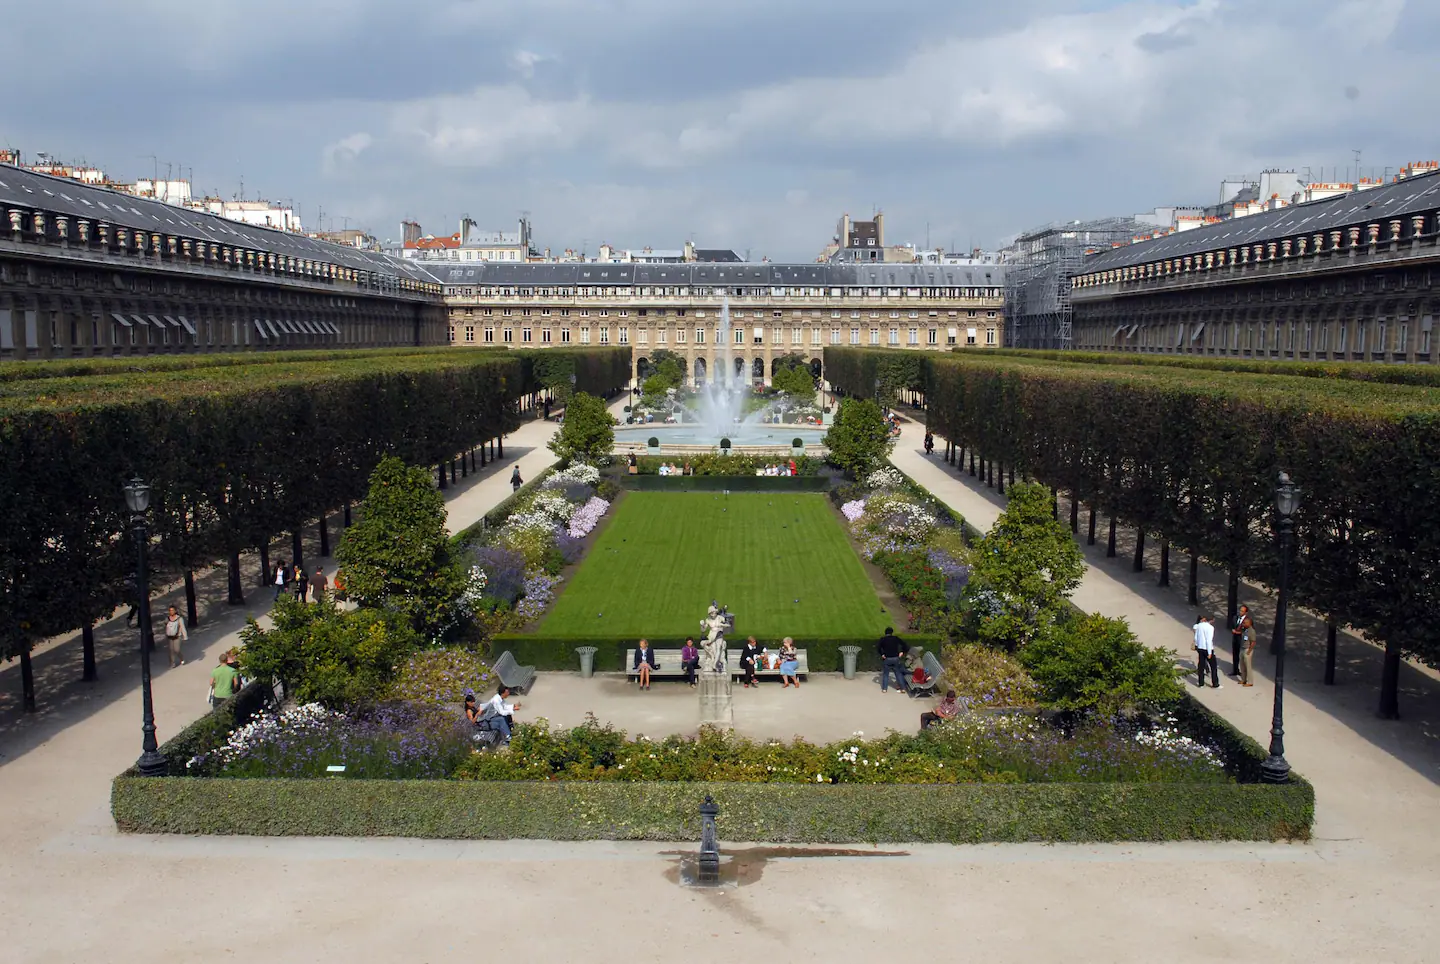 Palais Royal Garden: Just a 2-minute walk (180 yards)